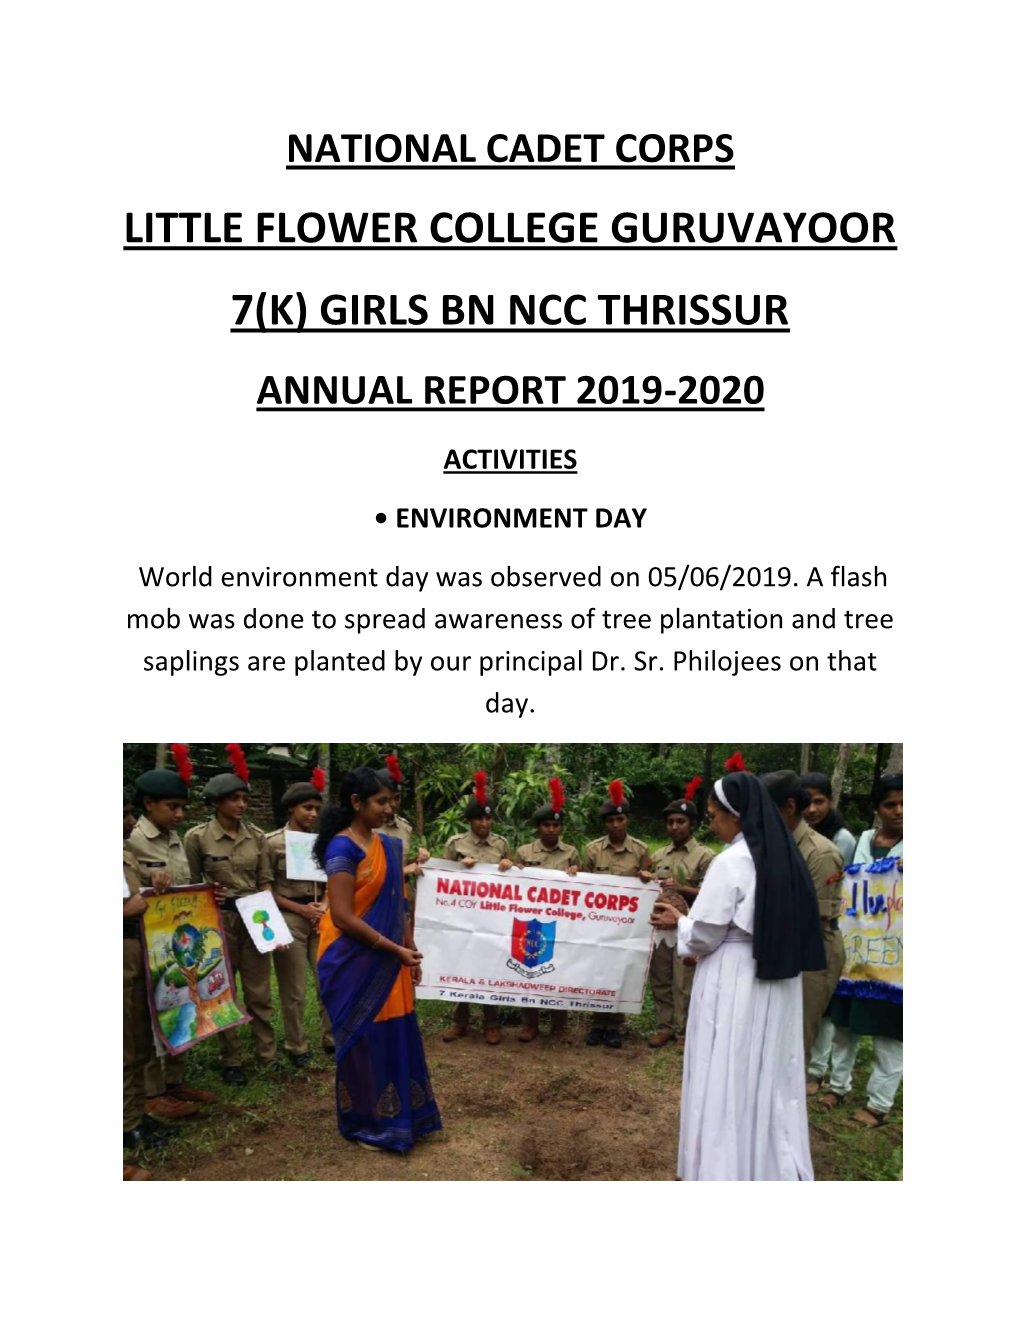 Girls Bn Ncc Thrissur Annual Report 2019-2020